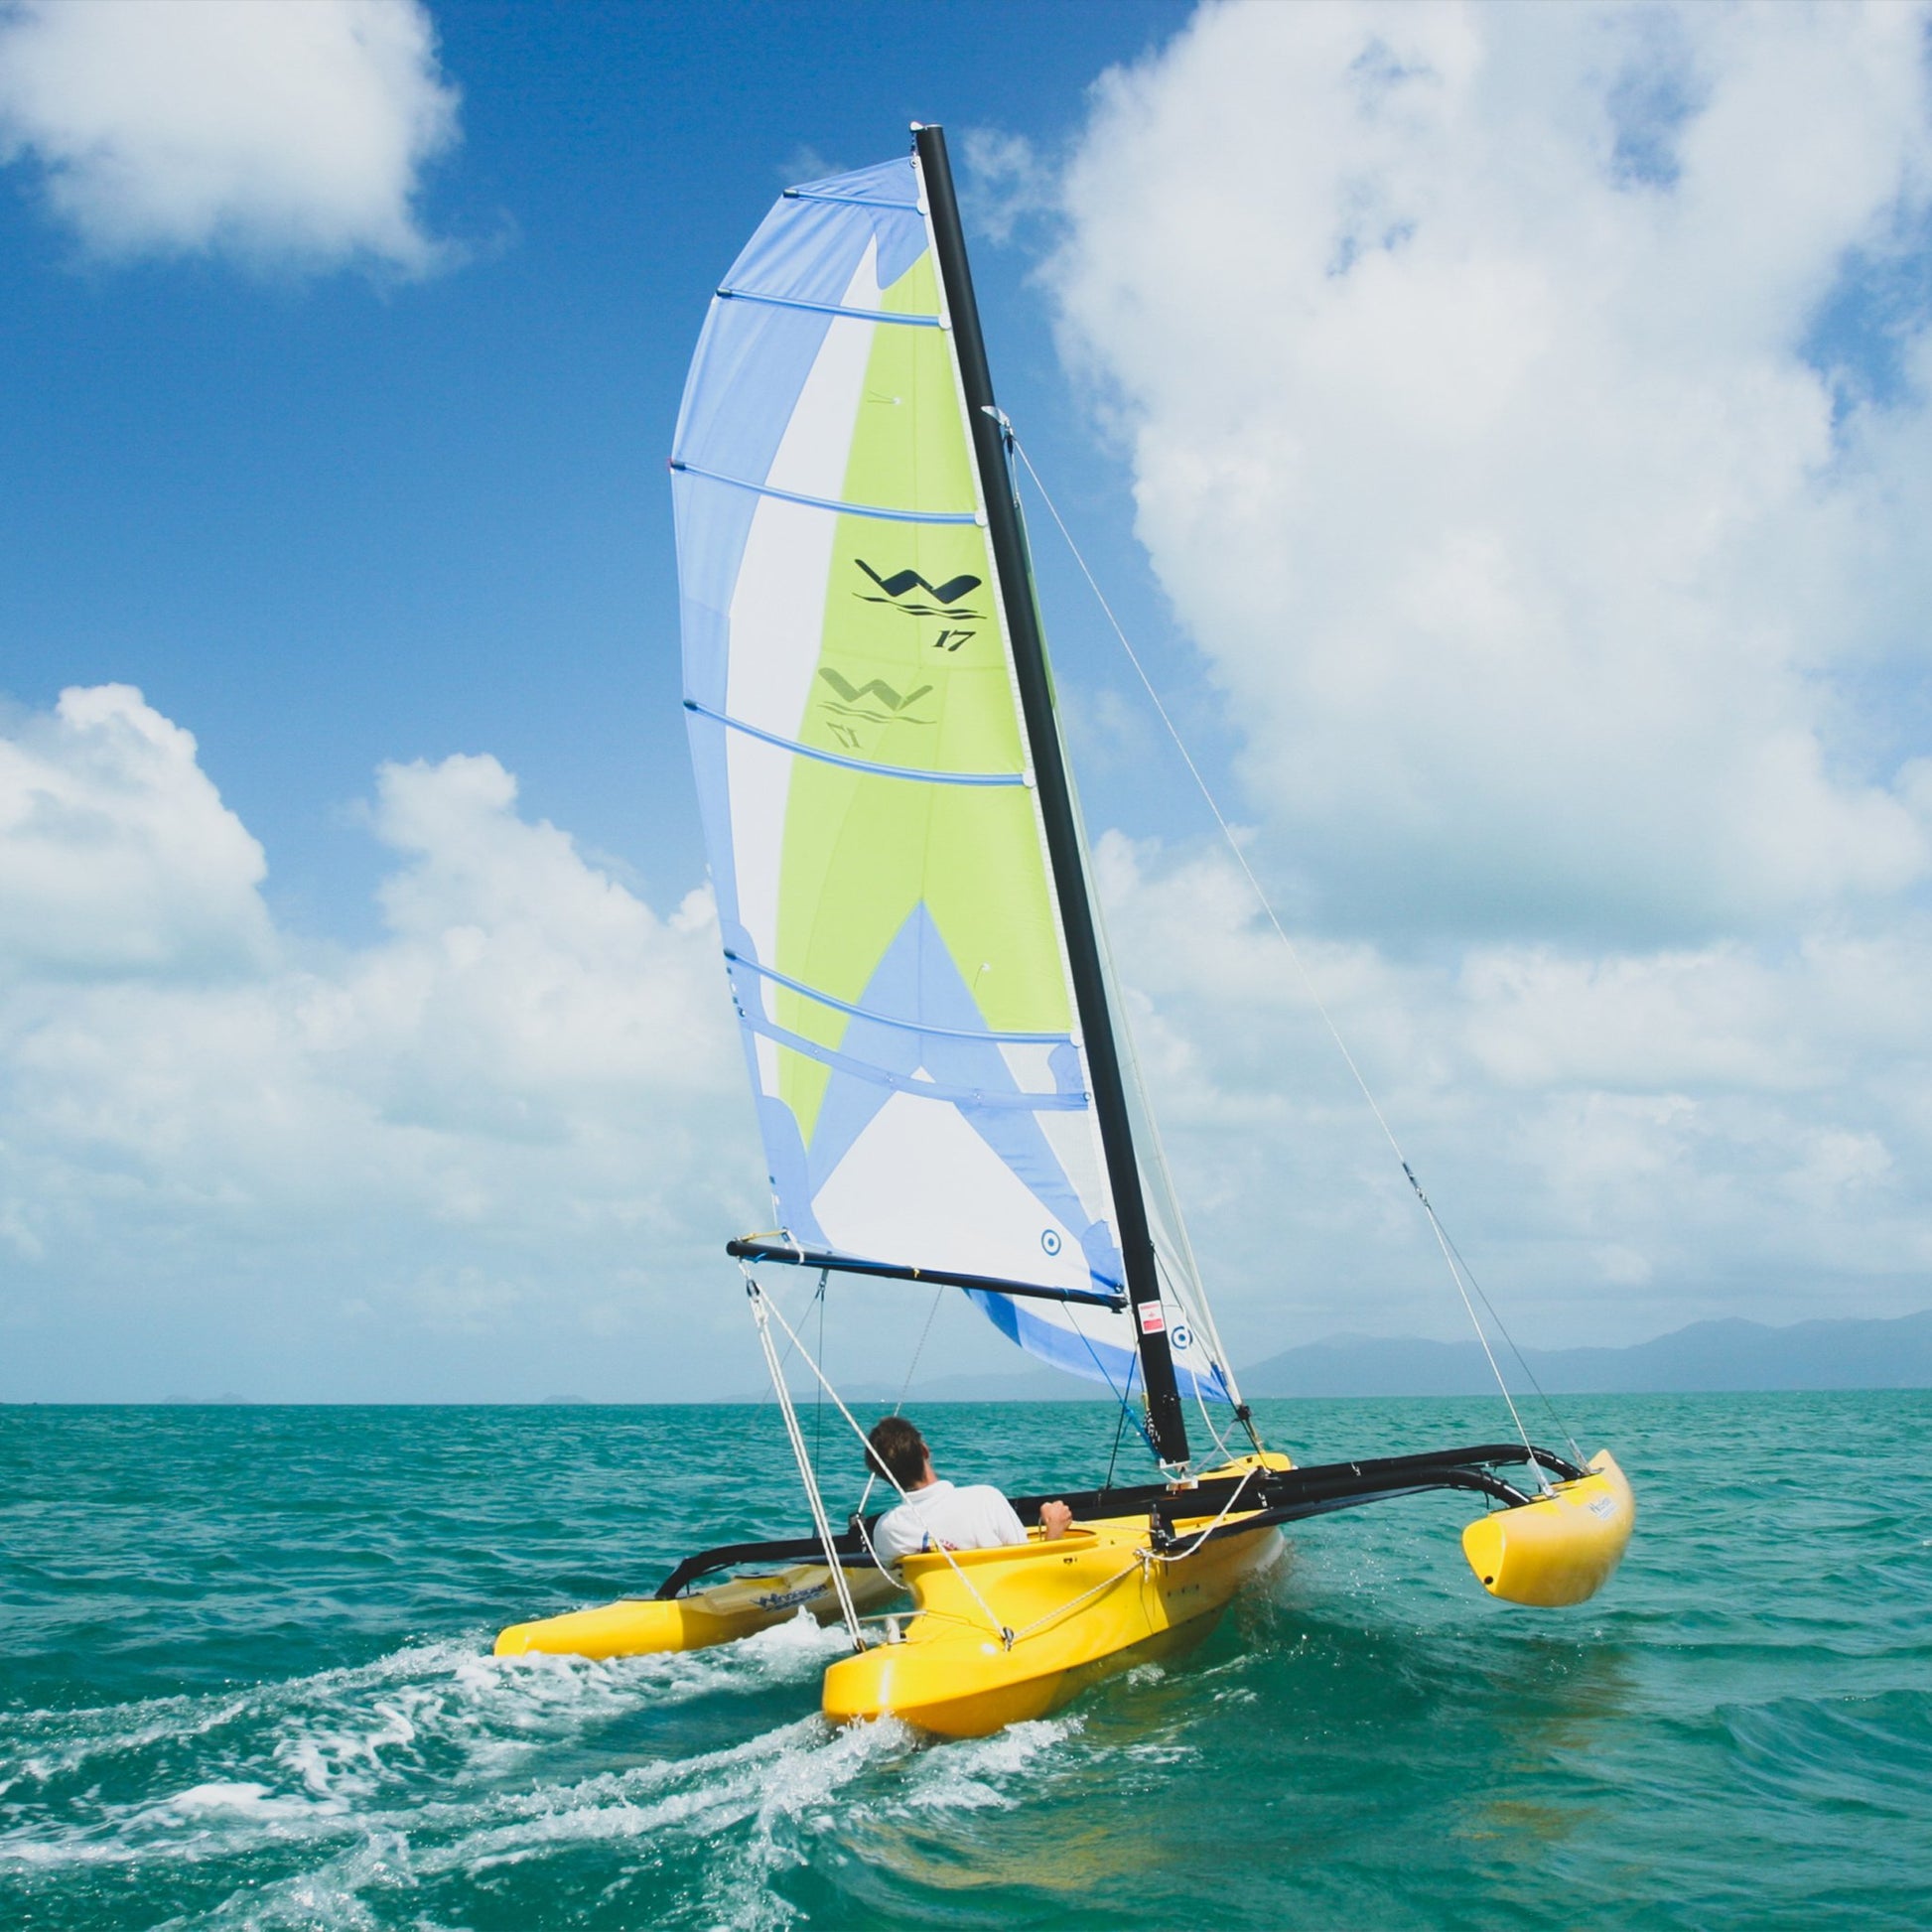 windrider 17 trimaran sailboat for sale